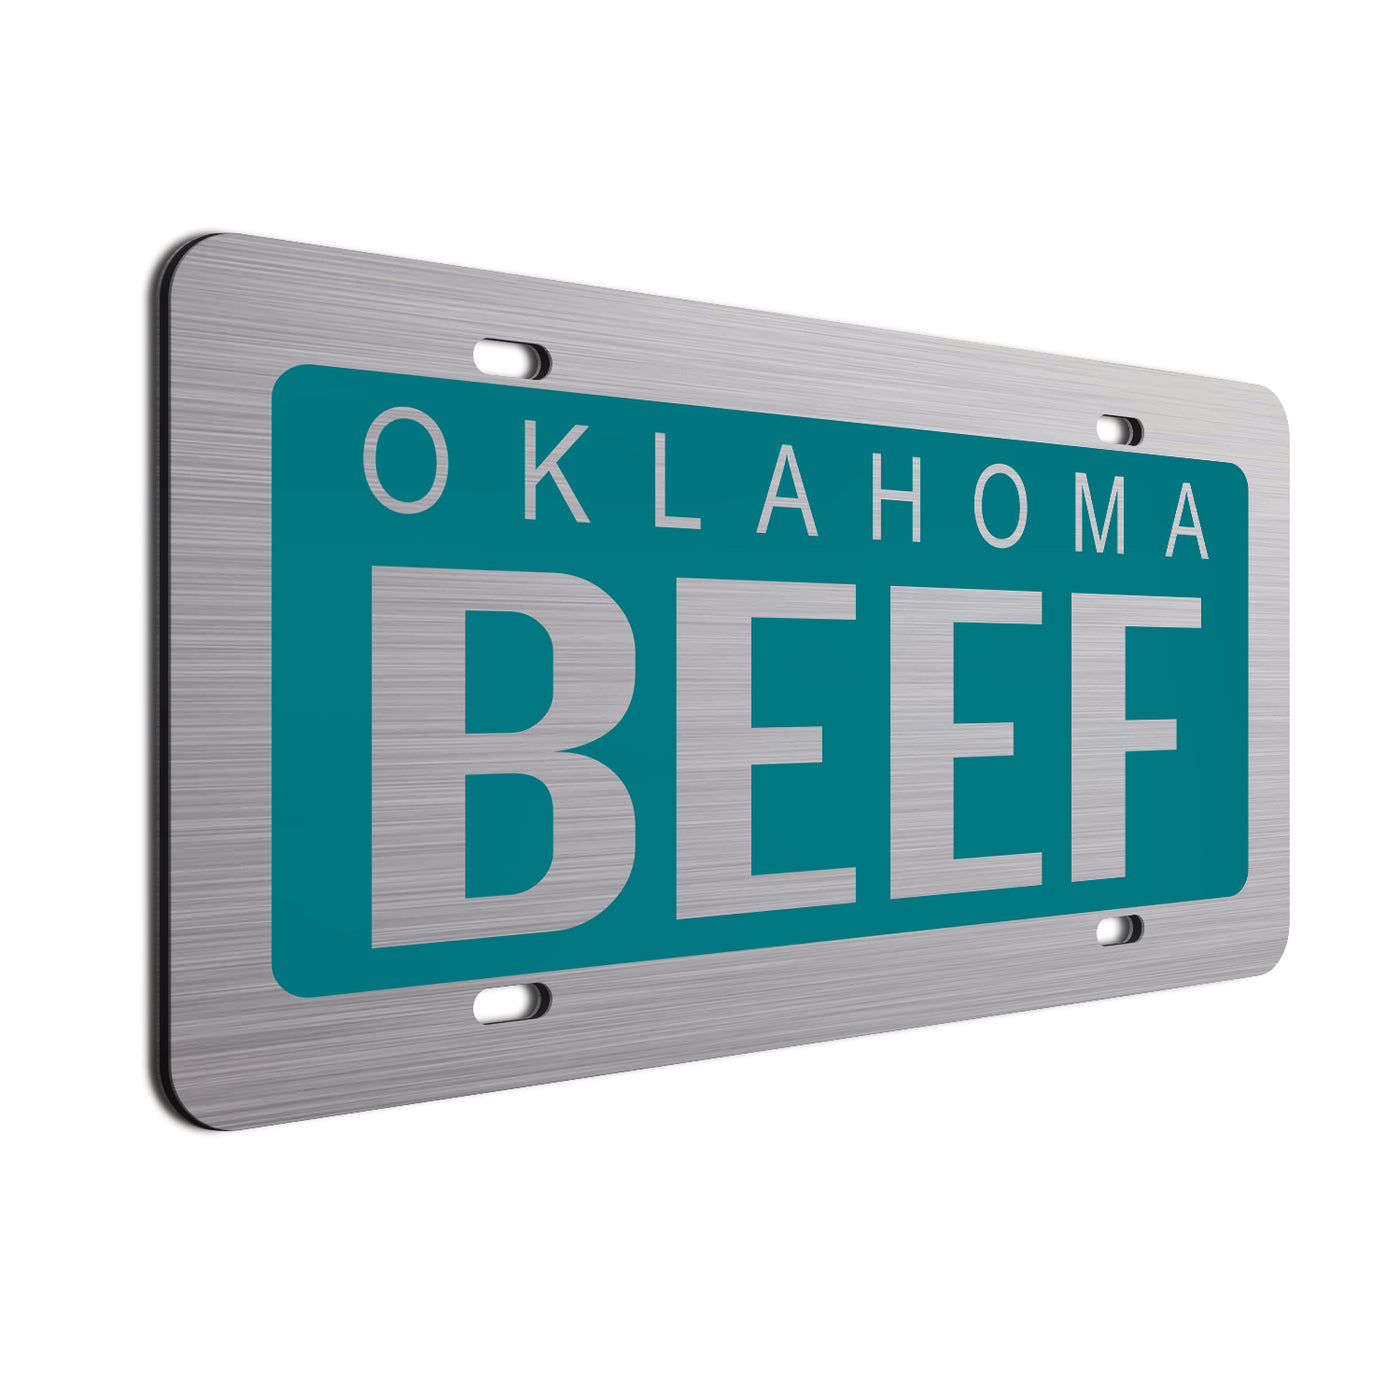 Oklahoma Beef Car License Plate Teal